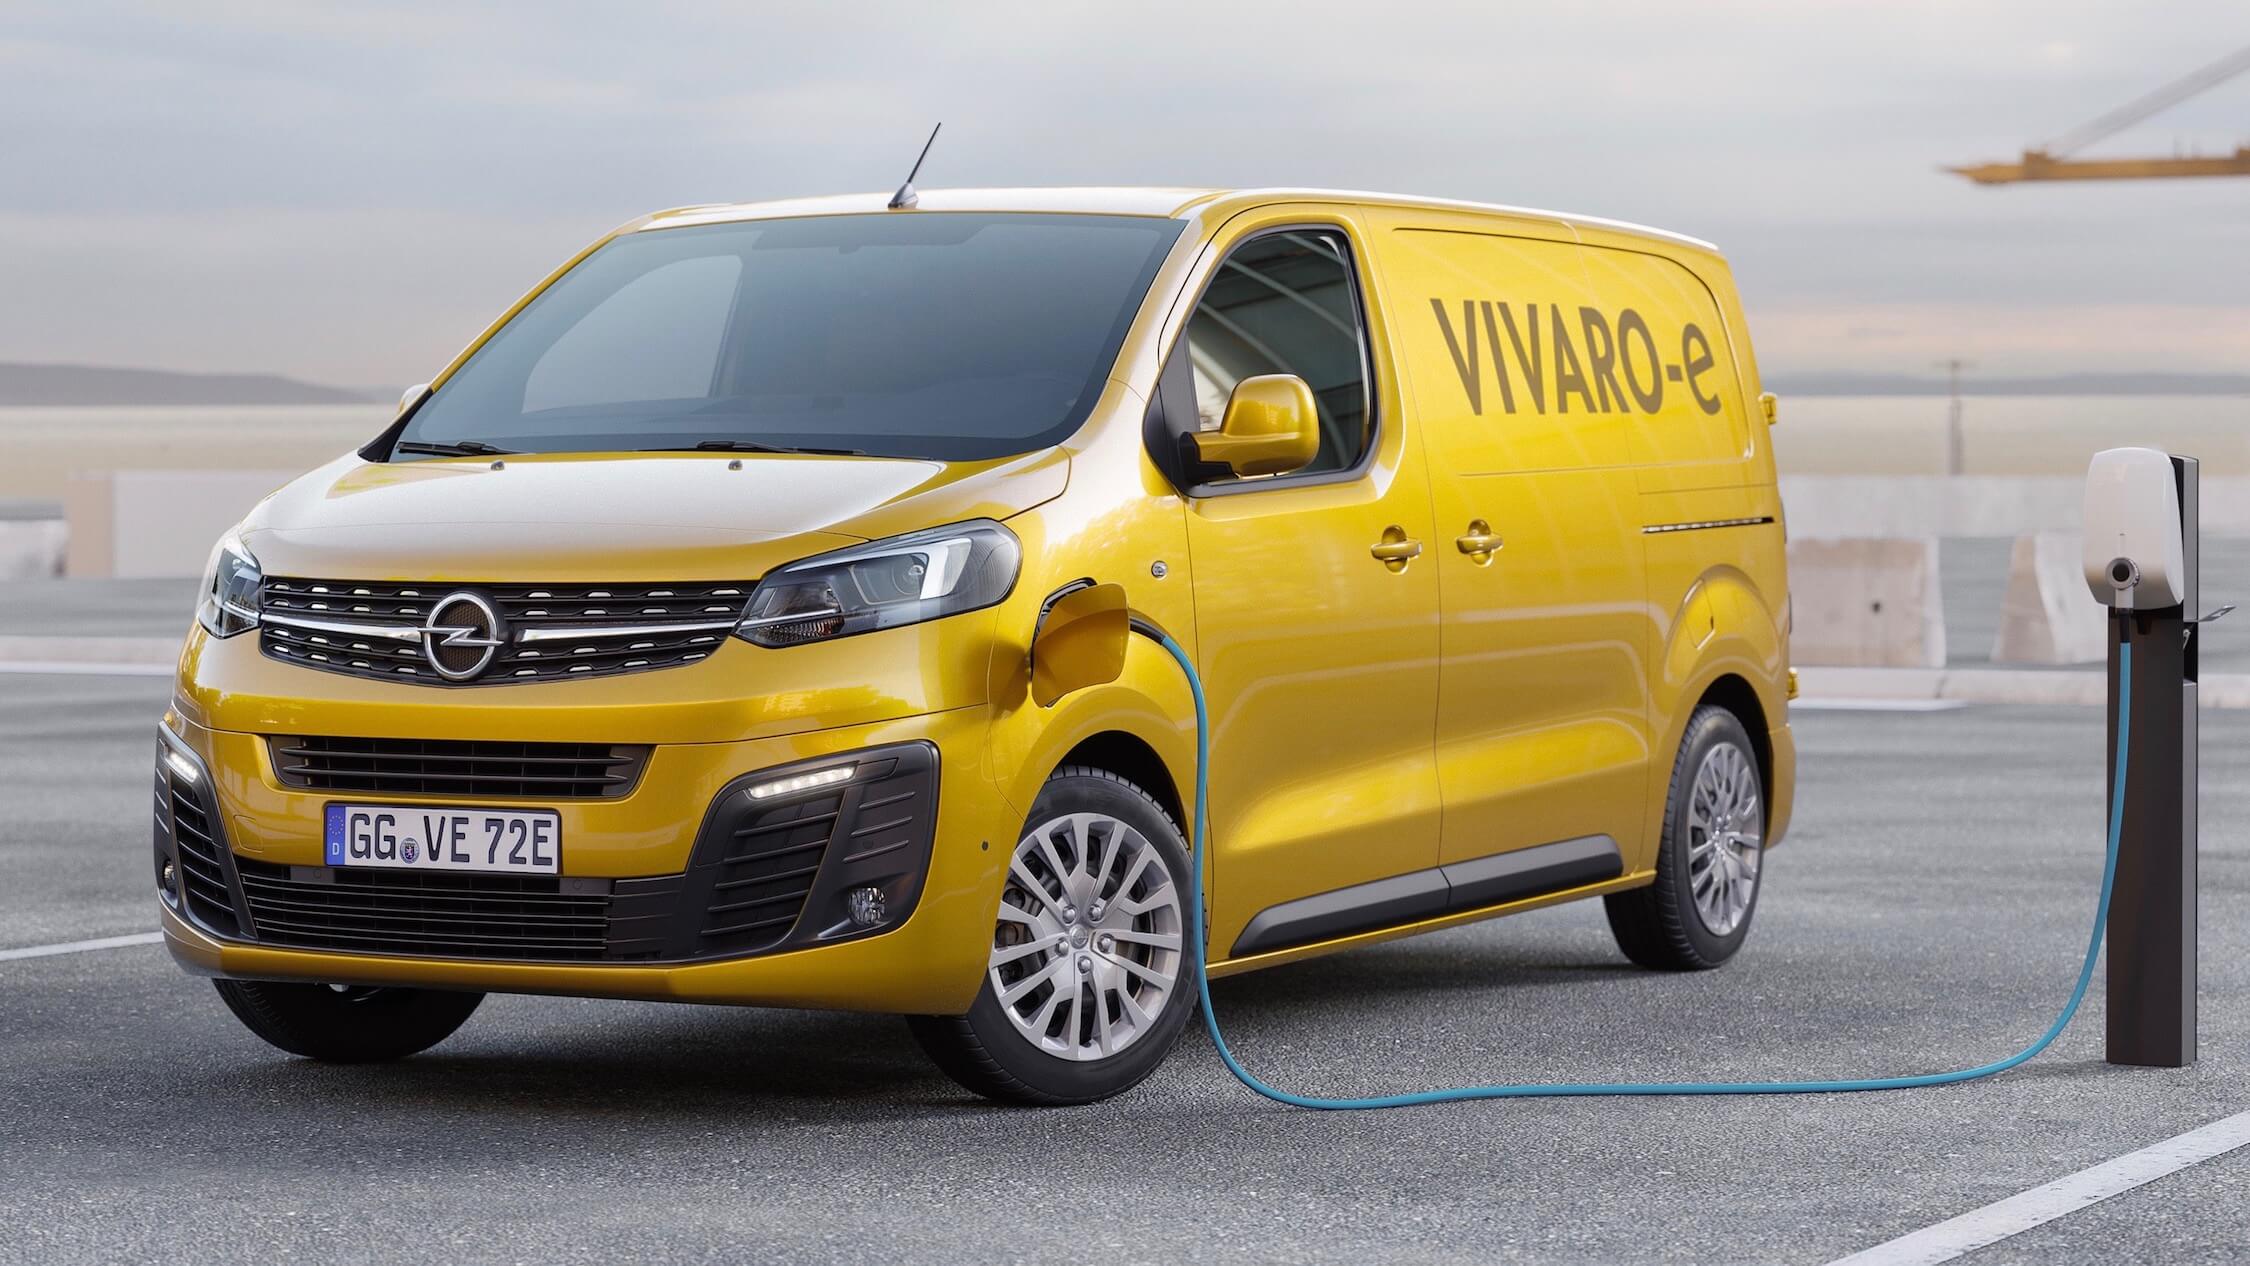 elektrische Opel Vivaro e opladen